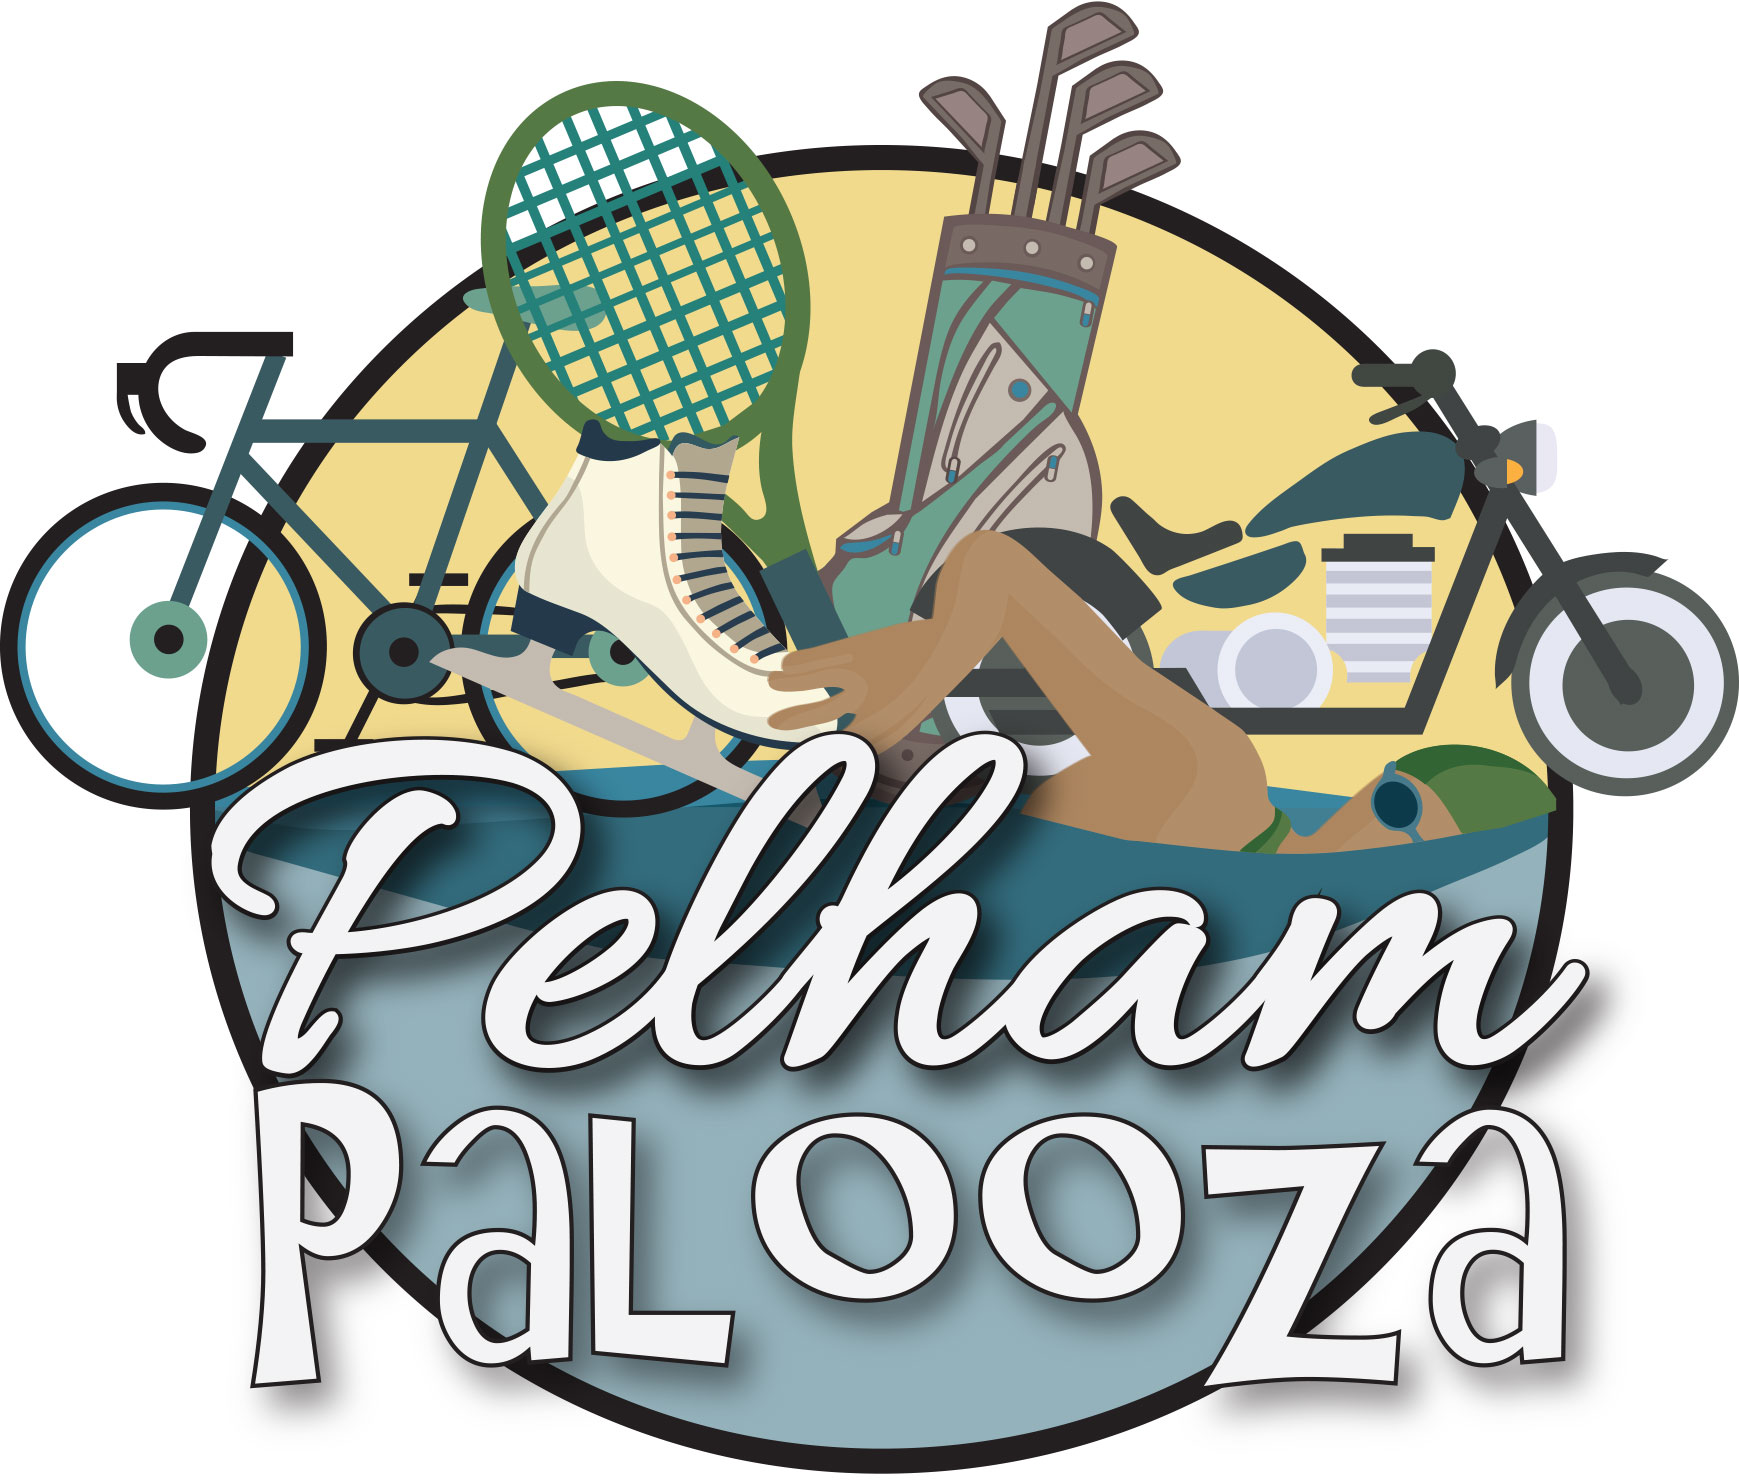 7th Annual Pelham Palooza in the Park